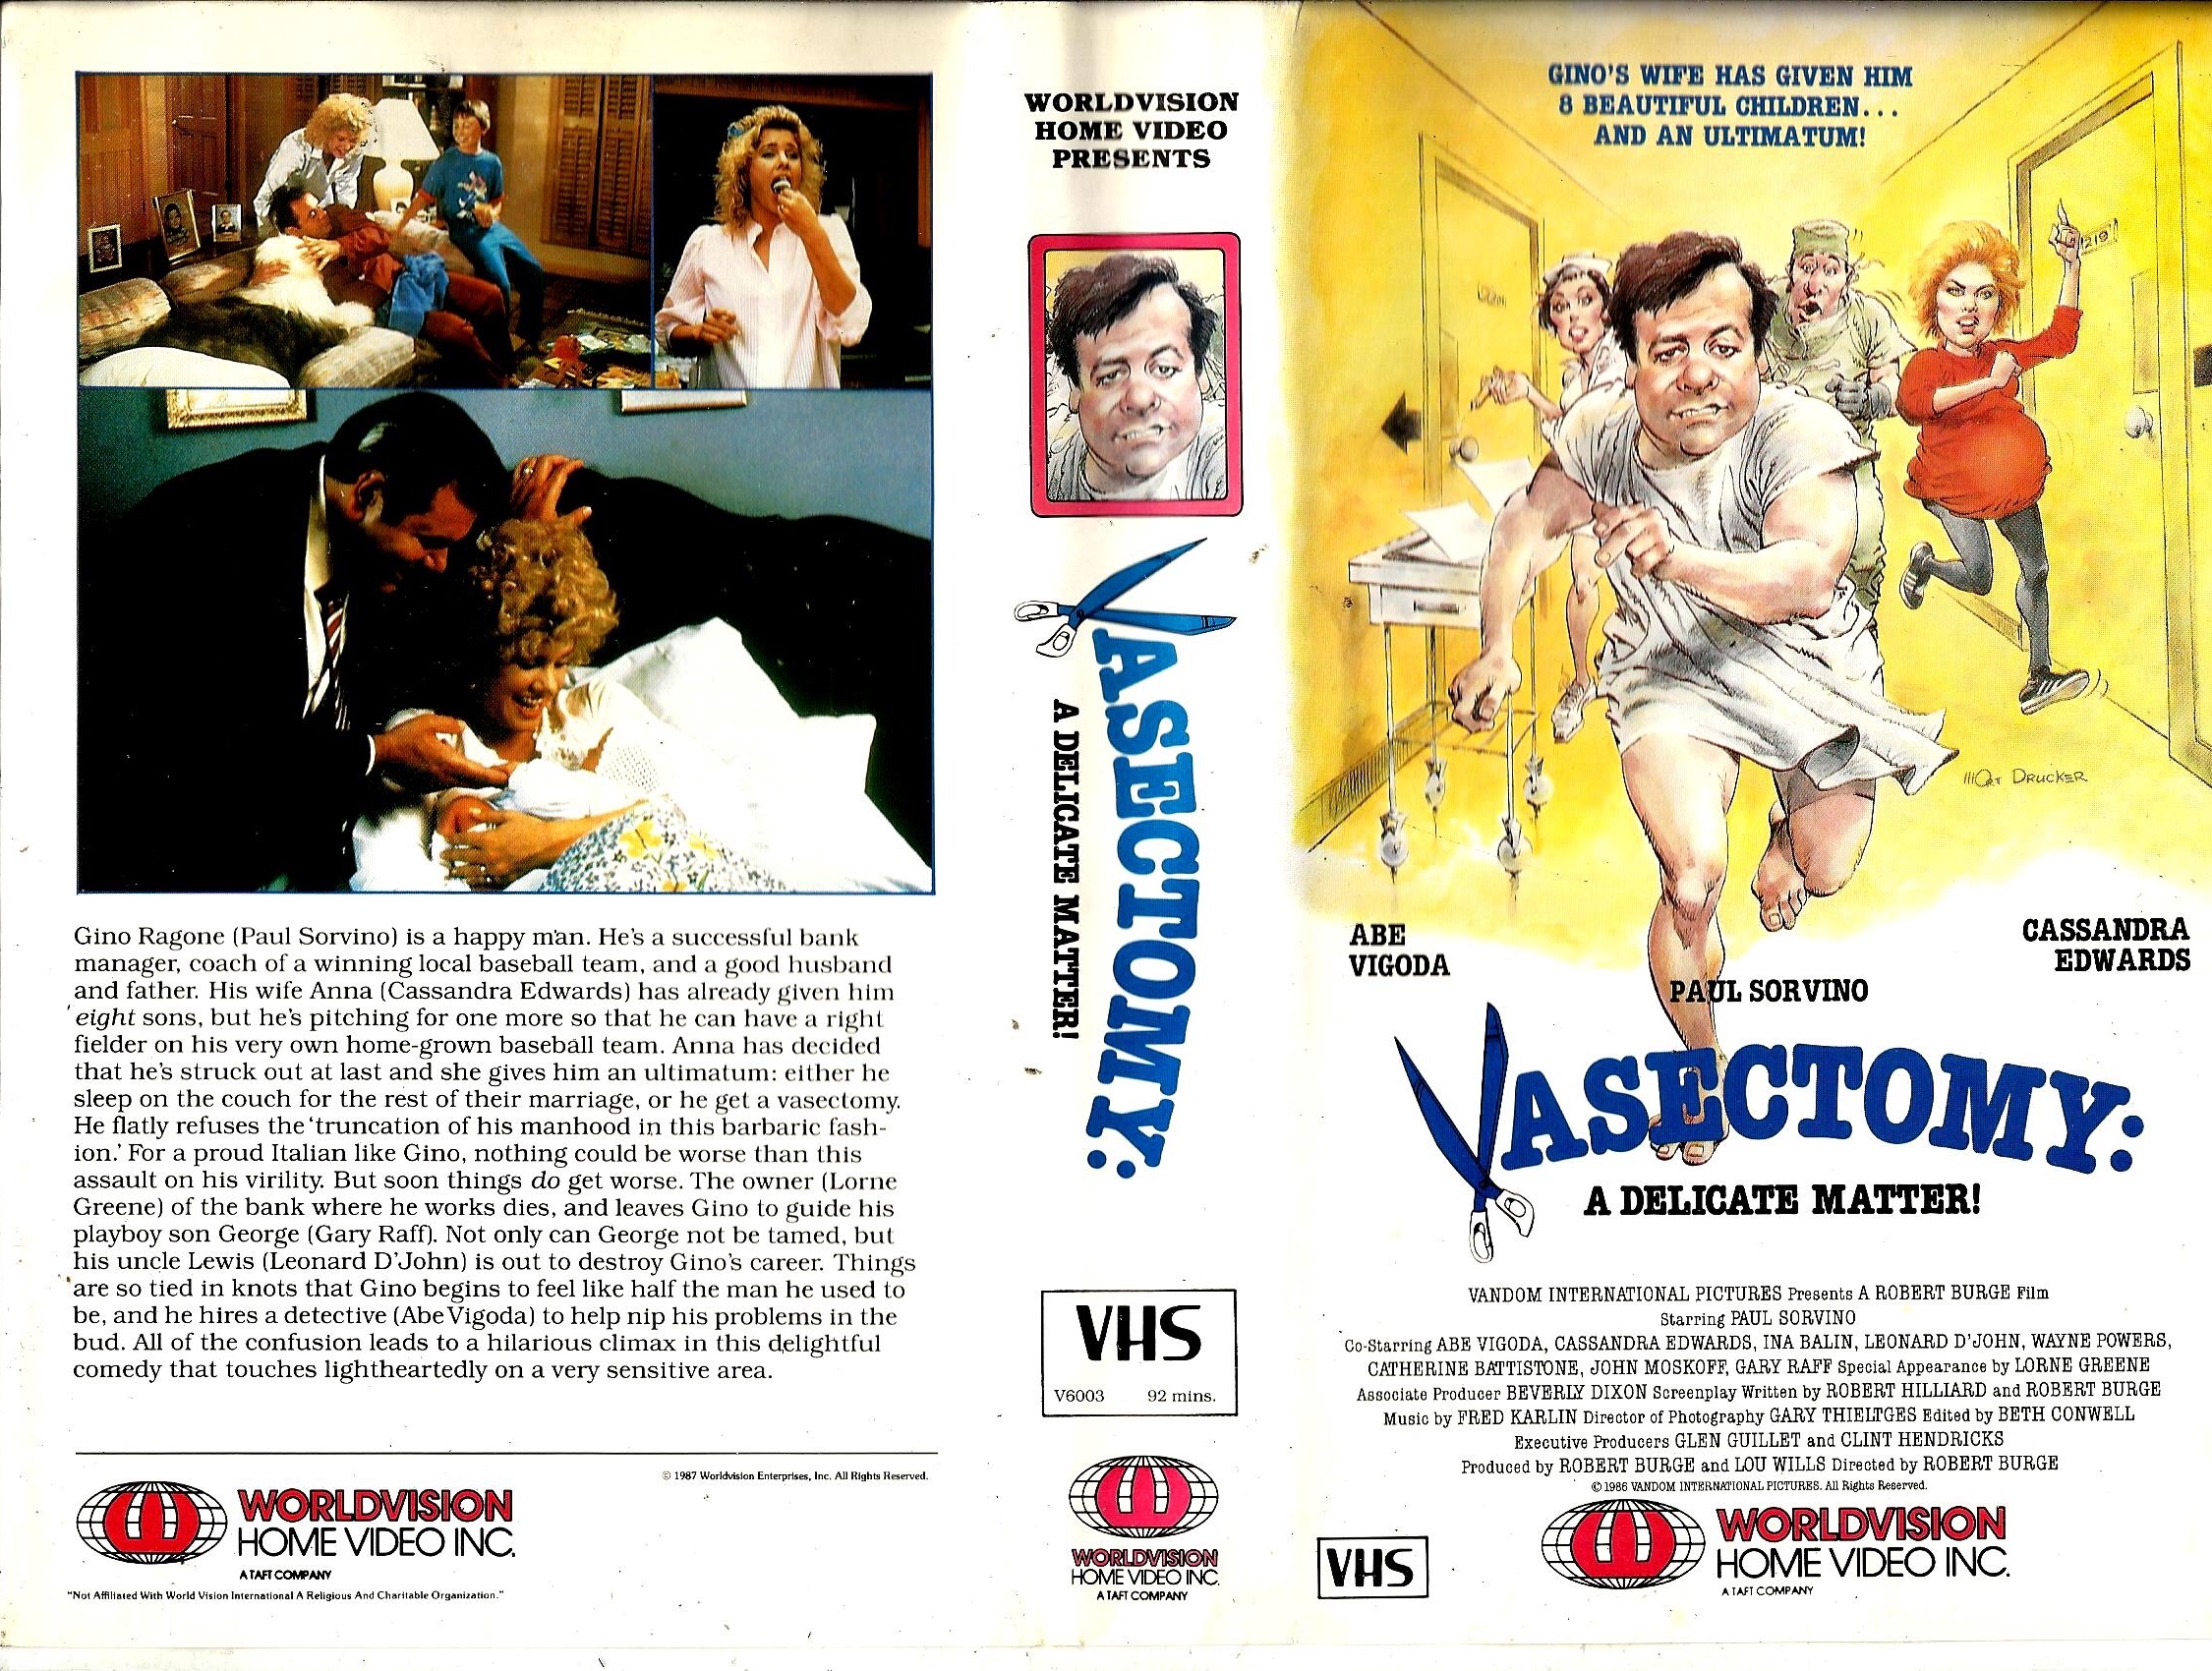 Vasectomy: A Delicate Matter (1986) Screenshot 3